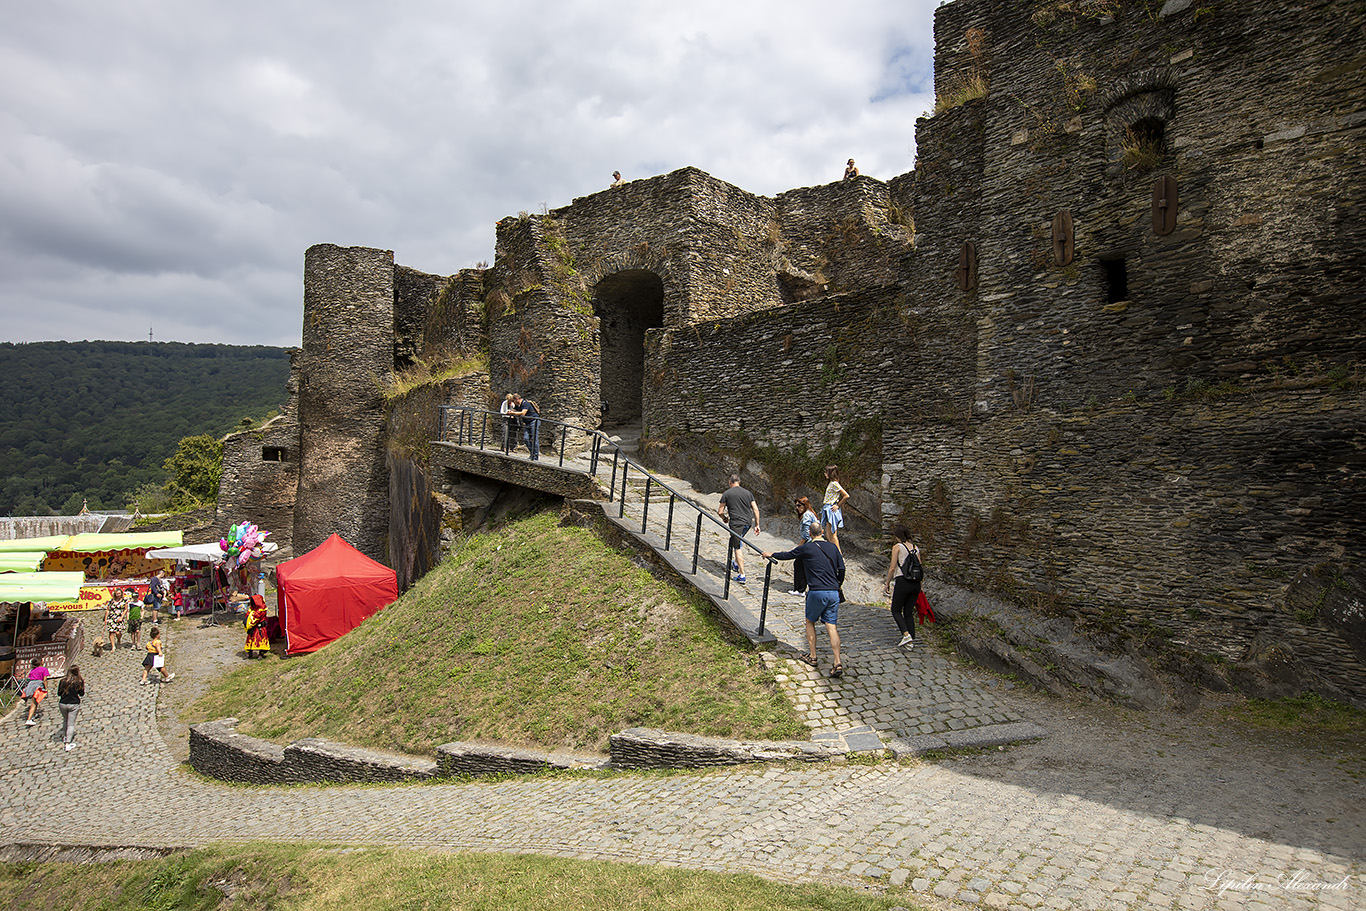 Феодальный замок Ла-Рош-Ан-Арденн (The Feudal Castle of La Roche-en-Ardenne)  - Ла-Рош-ан-Арден (La Roche-en-Ardenne)